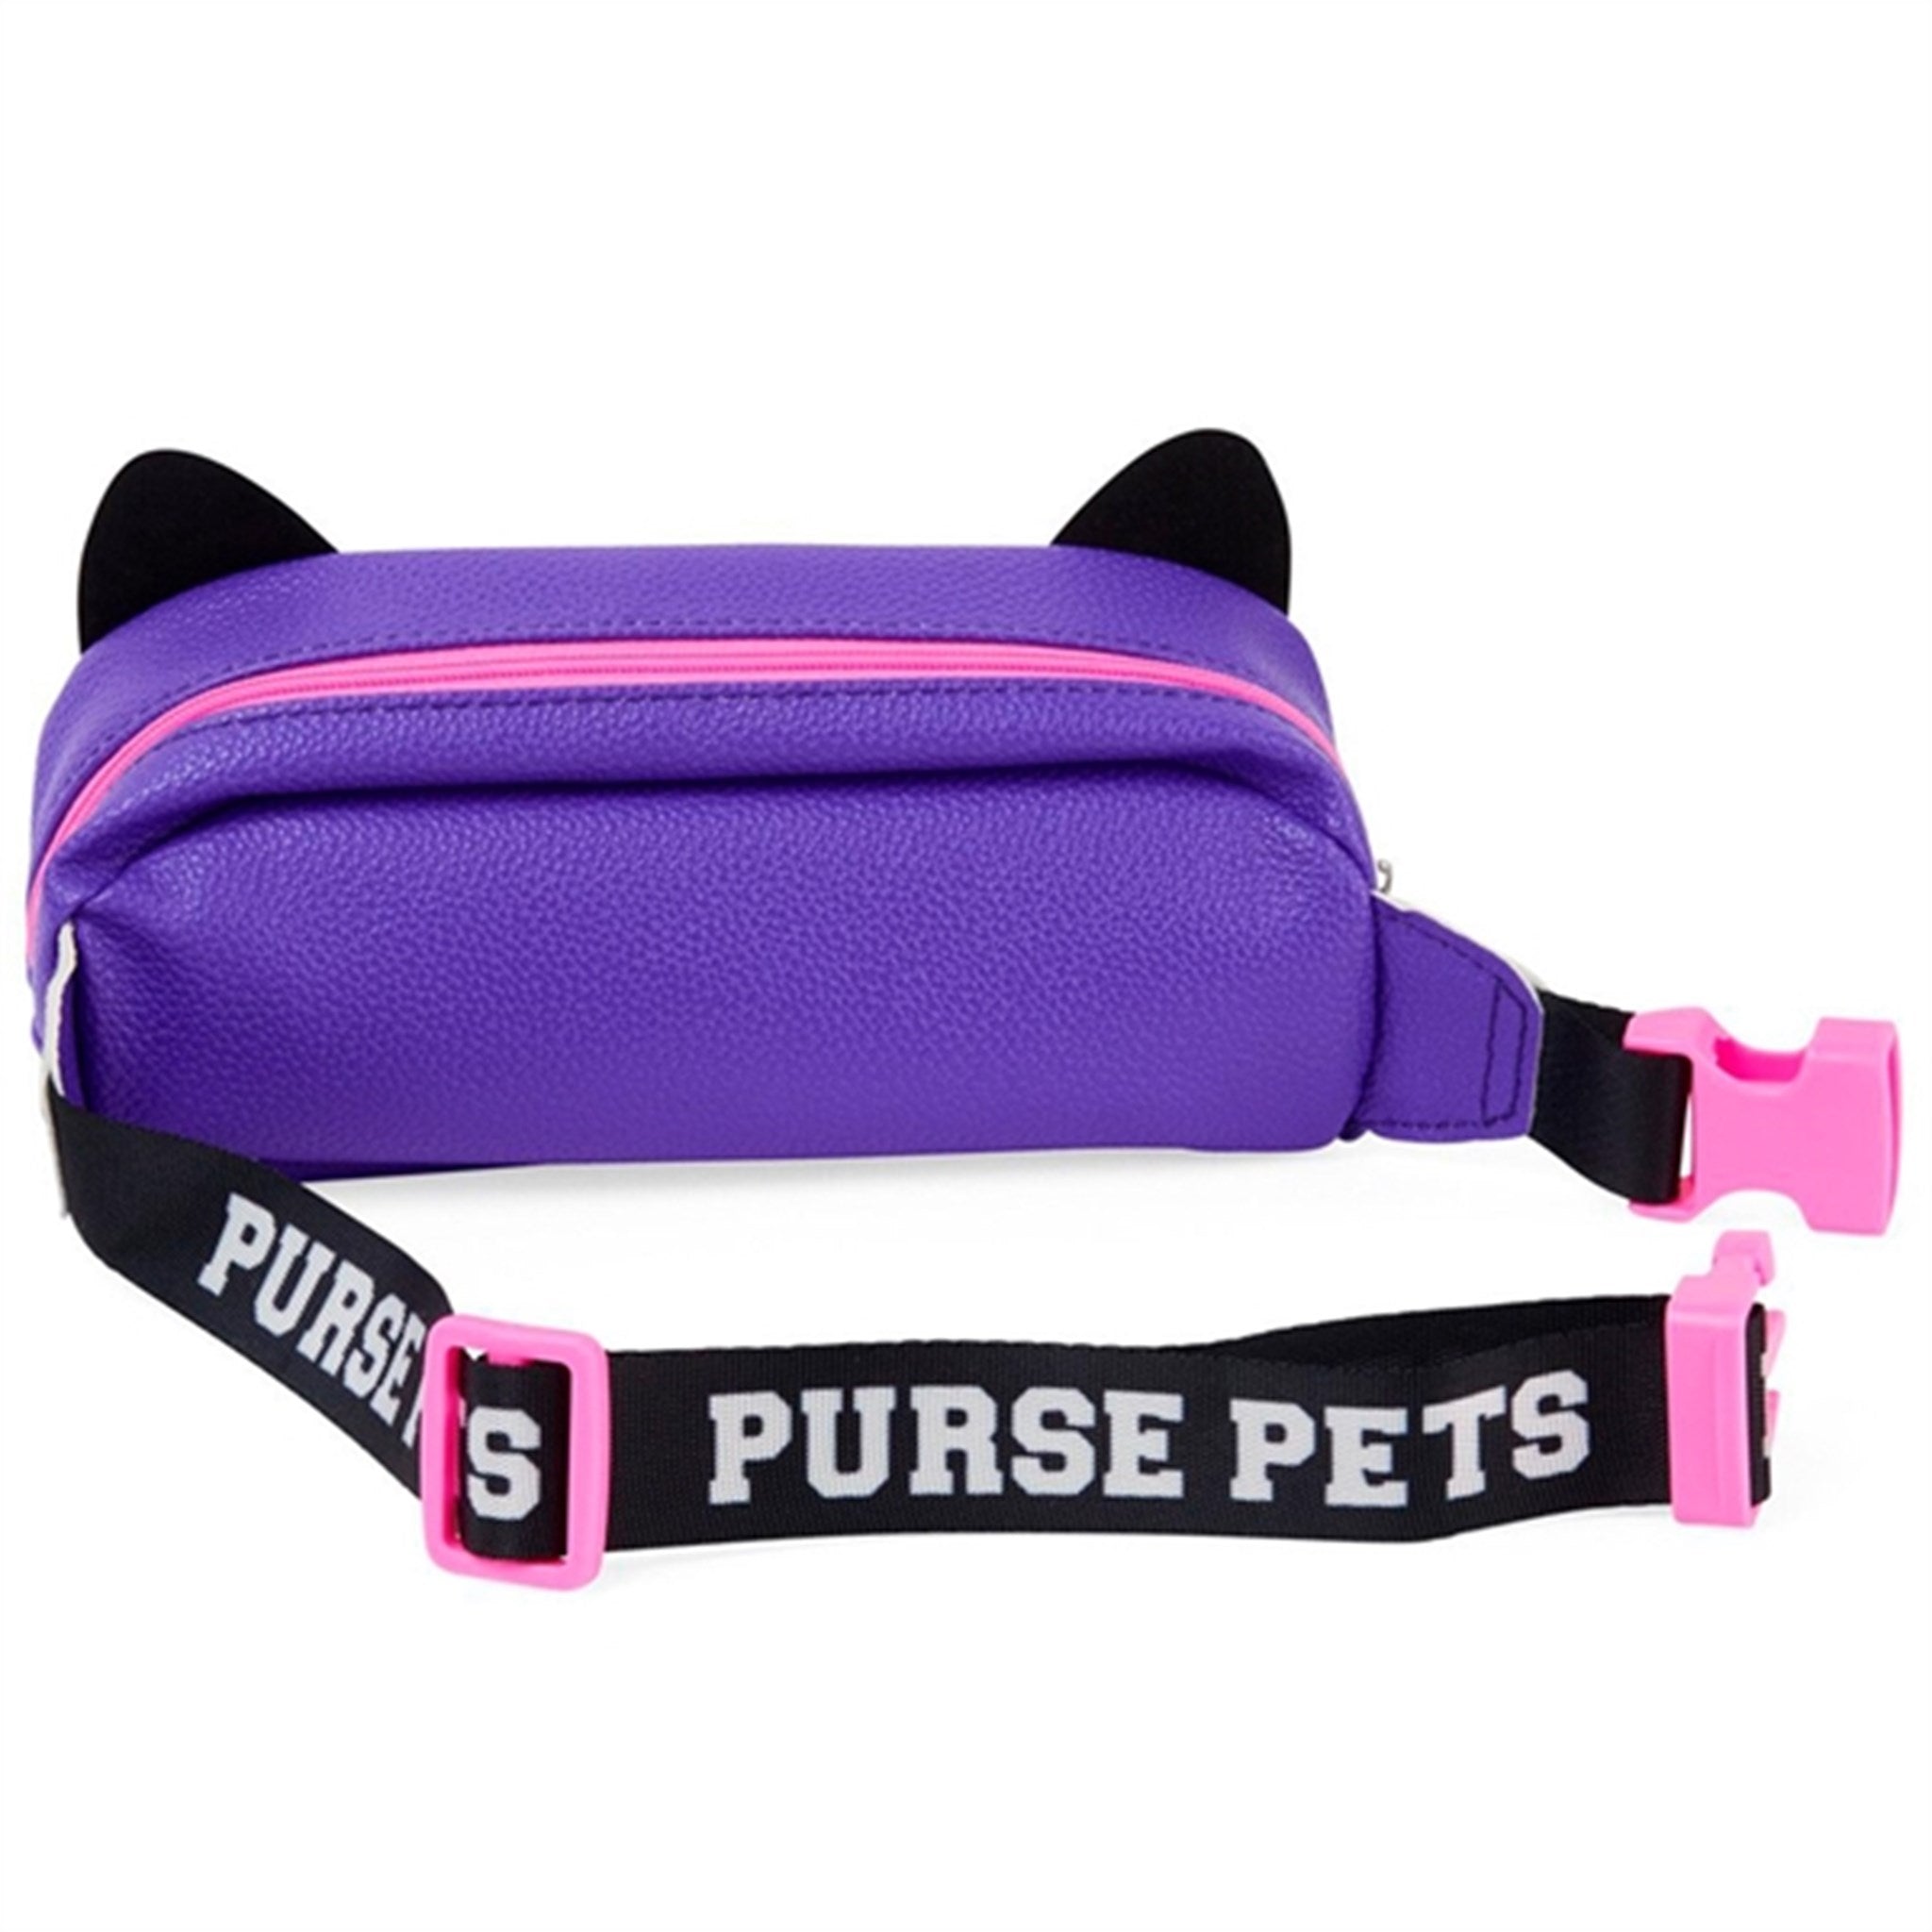 Purse Pets Belt Bag - Cheetah 2